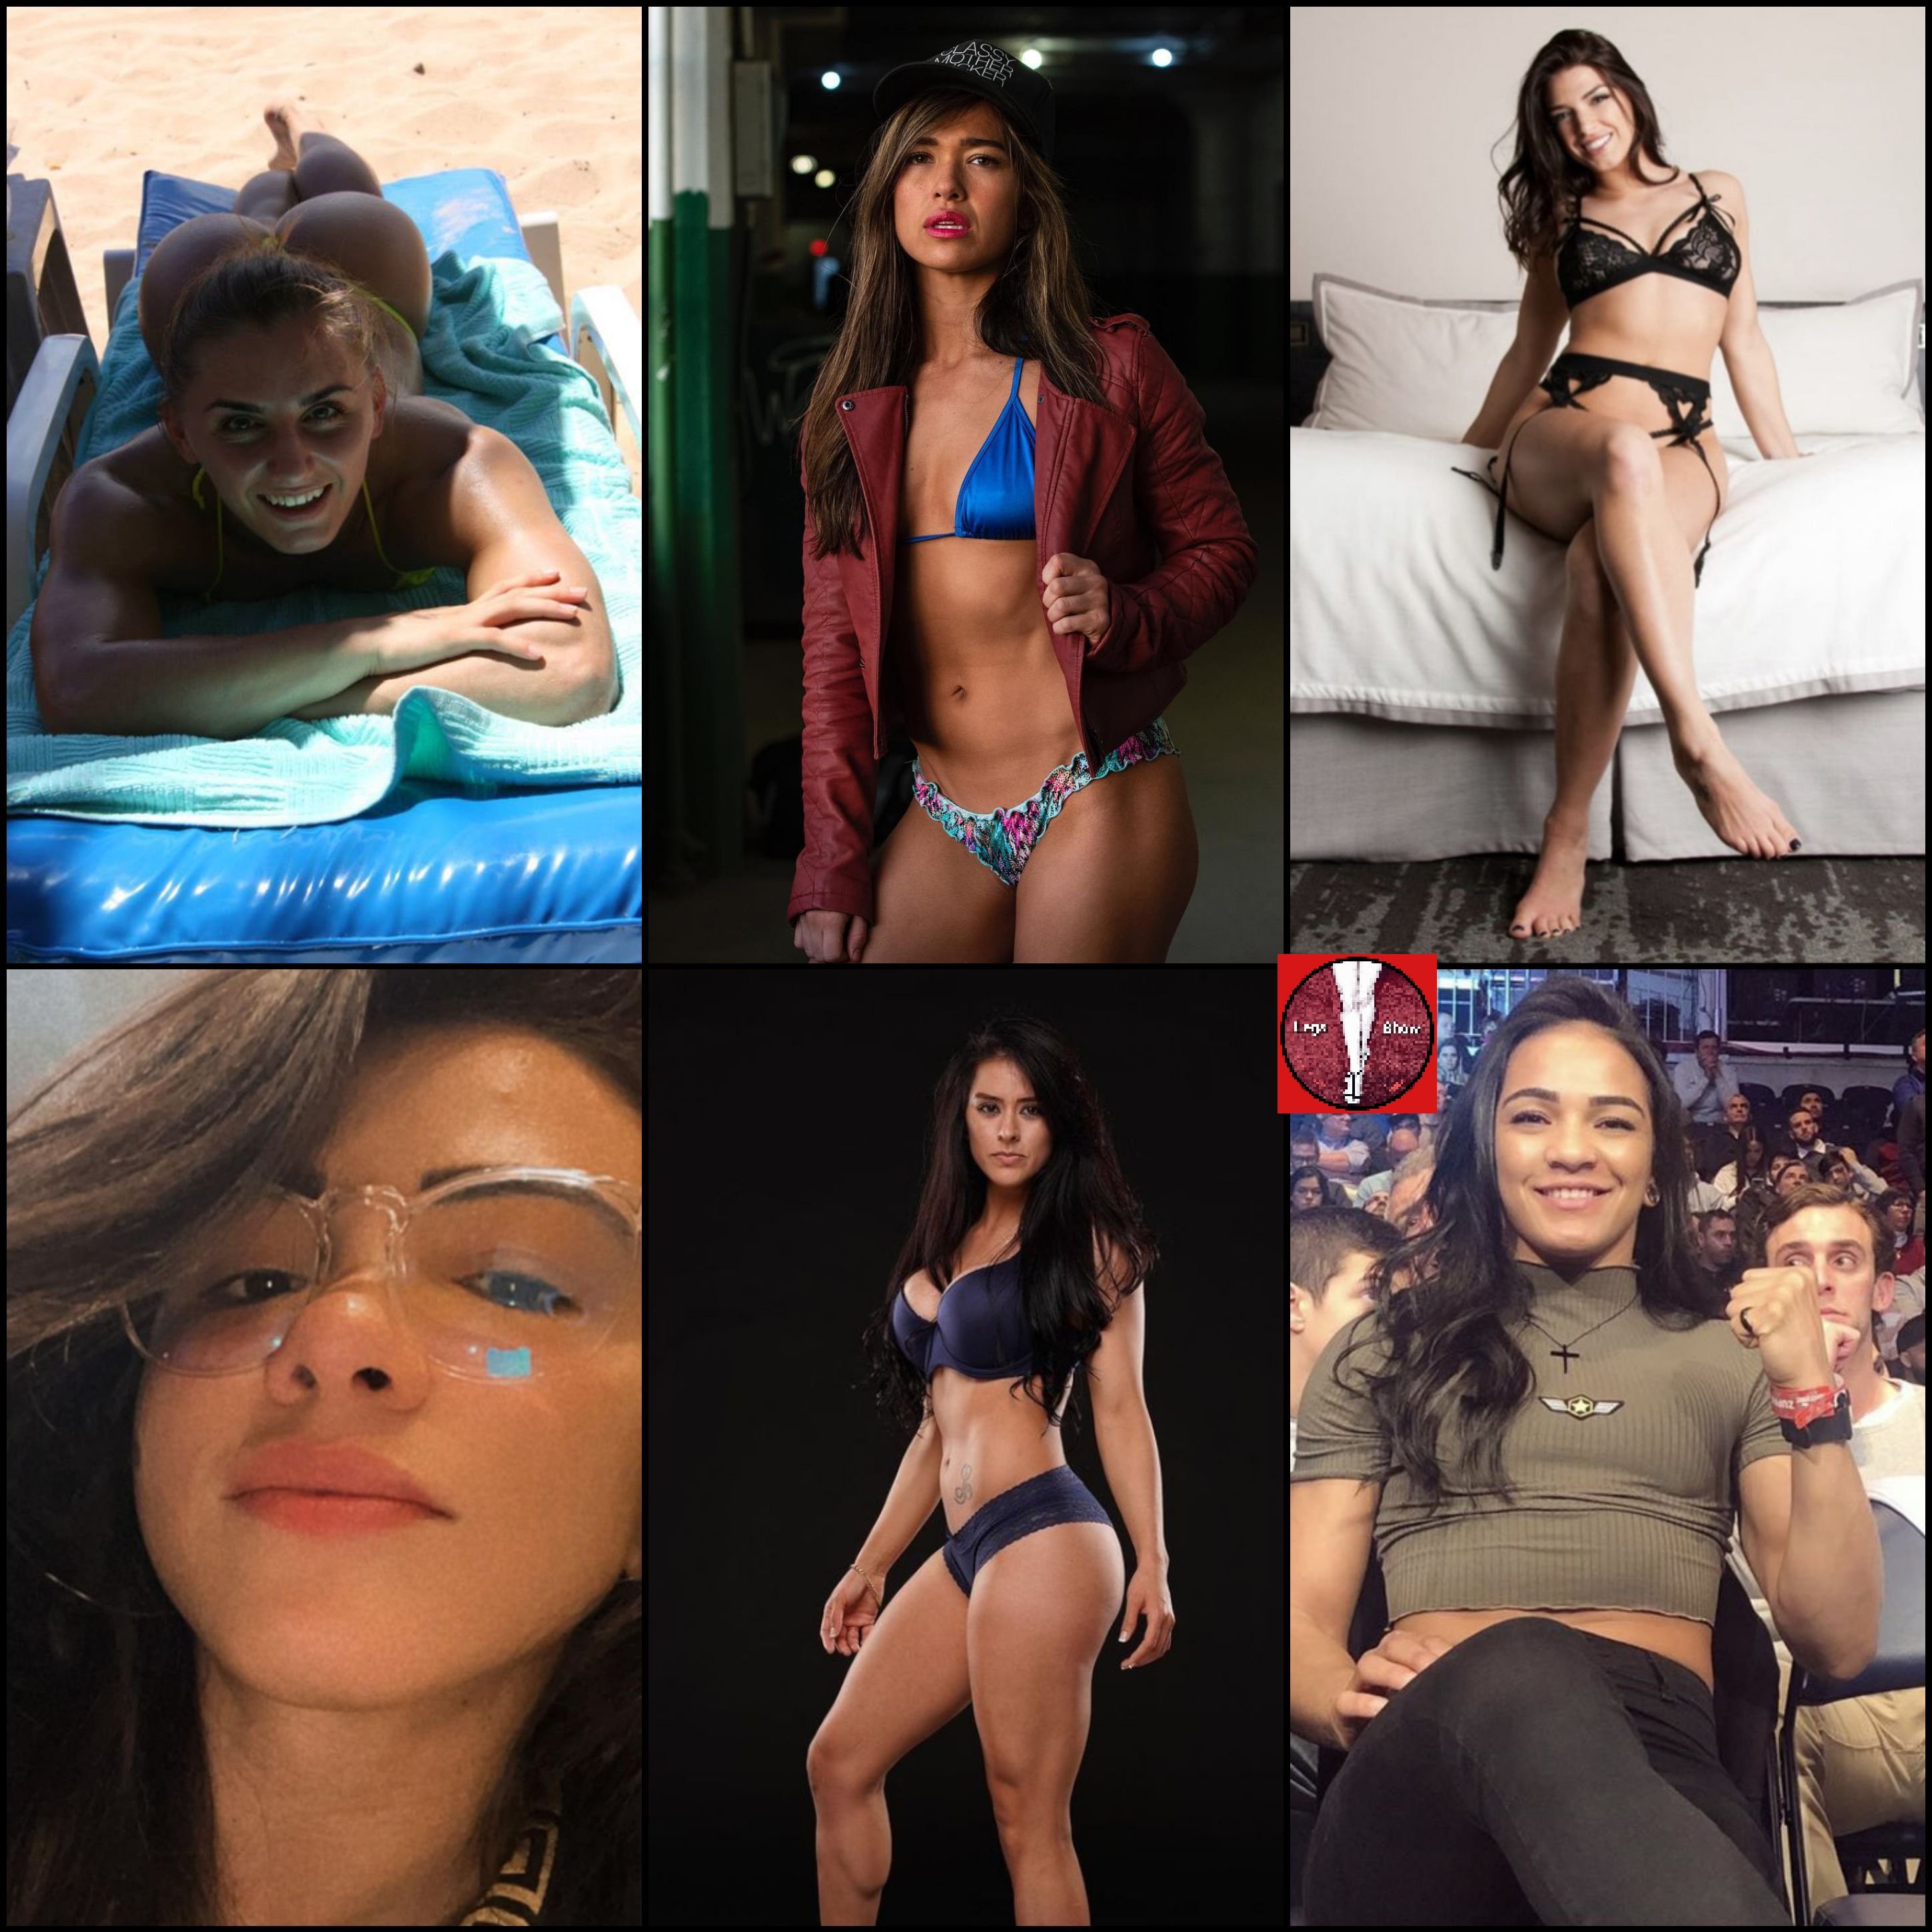 Give skyde geni Legs on X: "The hottest women in MMA. Tier 4: #UFC #InvictaFC #Bellator  #CombateGlobal https://t.co/i7KiZ02rHi" / X